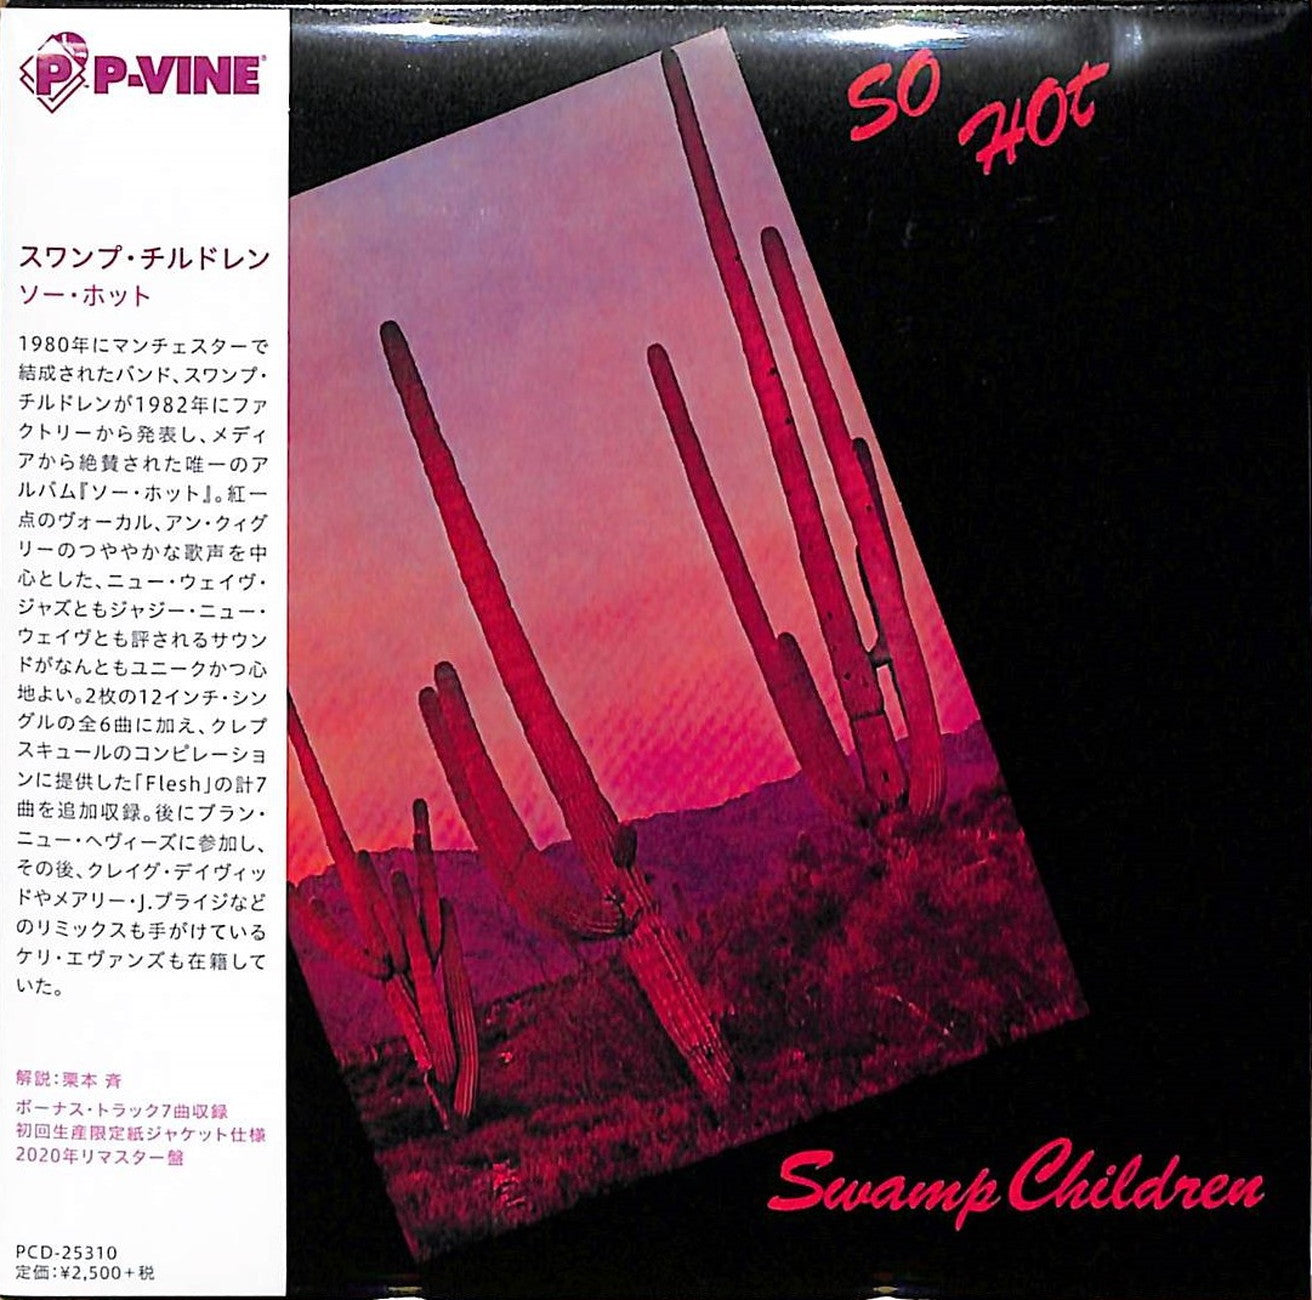 Swamp Children - So Hot - Japan  Mini LP CD Bonus Track Limited Edition